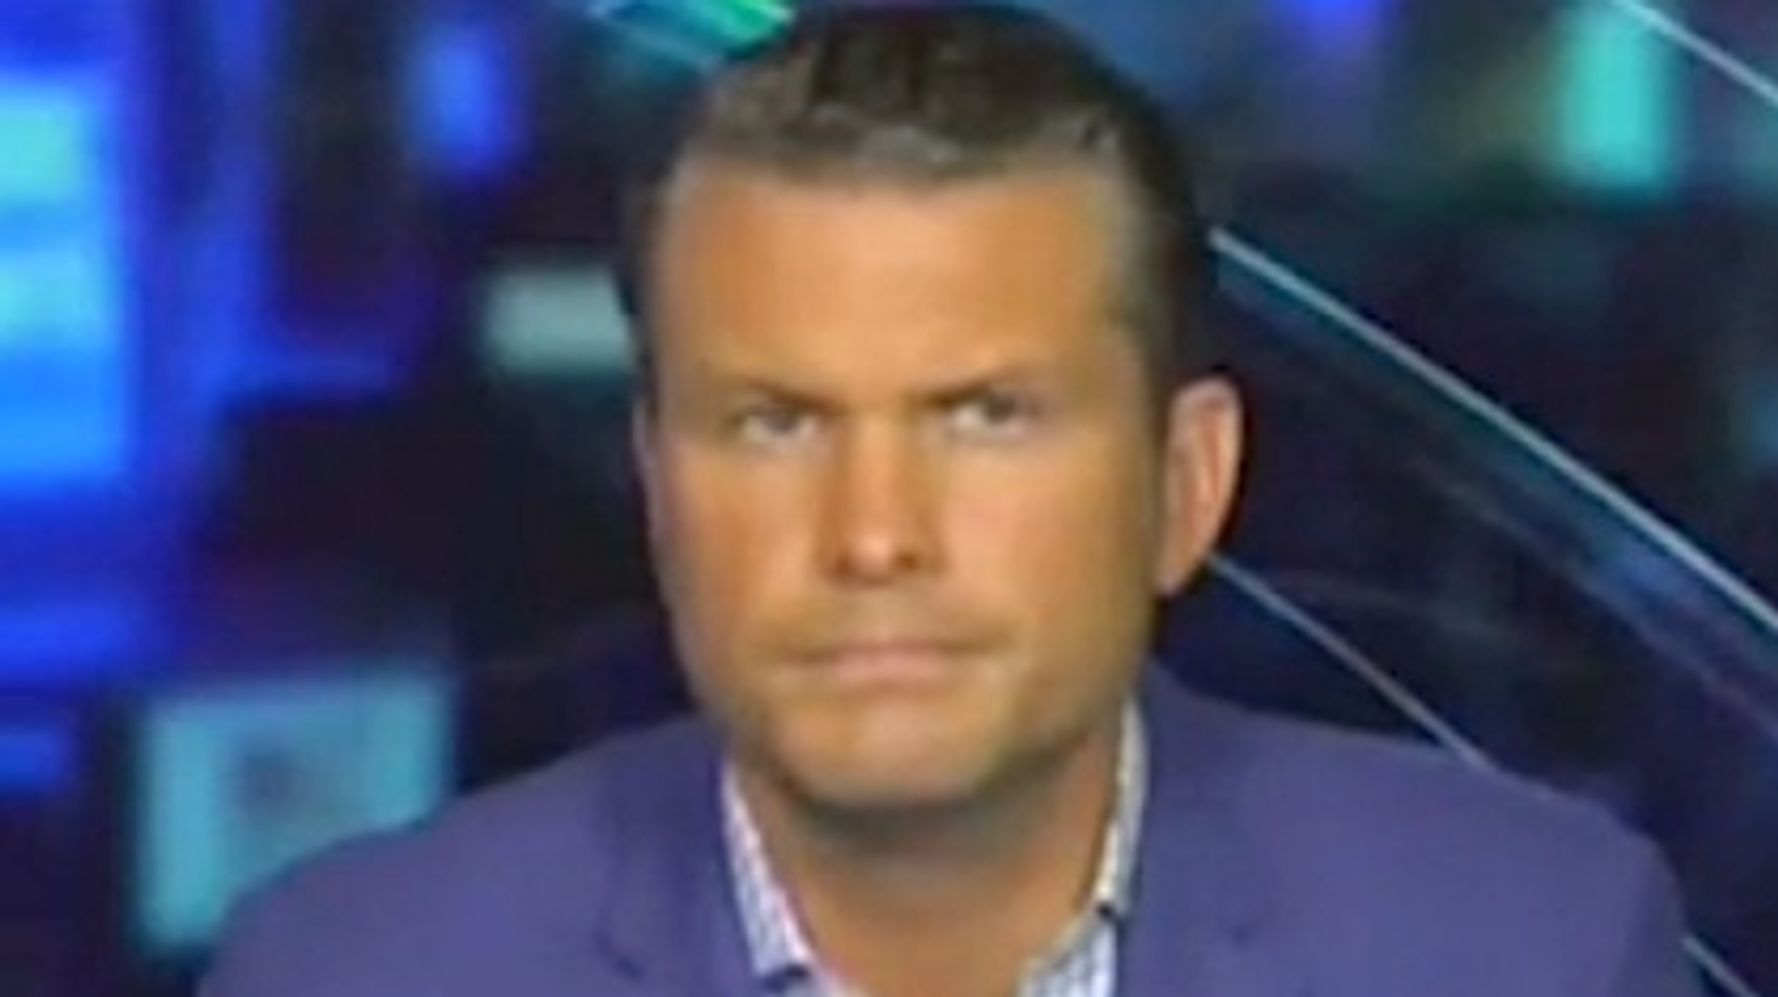 Fox News Host’s Cancel Culture Hypocrisy Exposed In Awkward Supercut Video